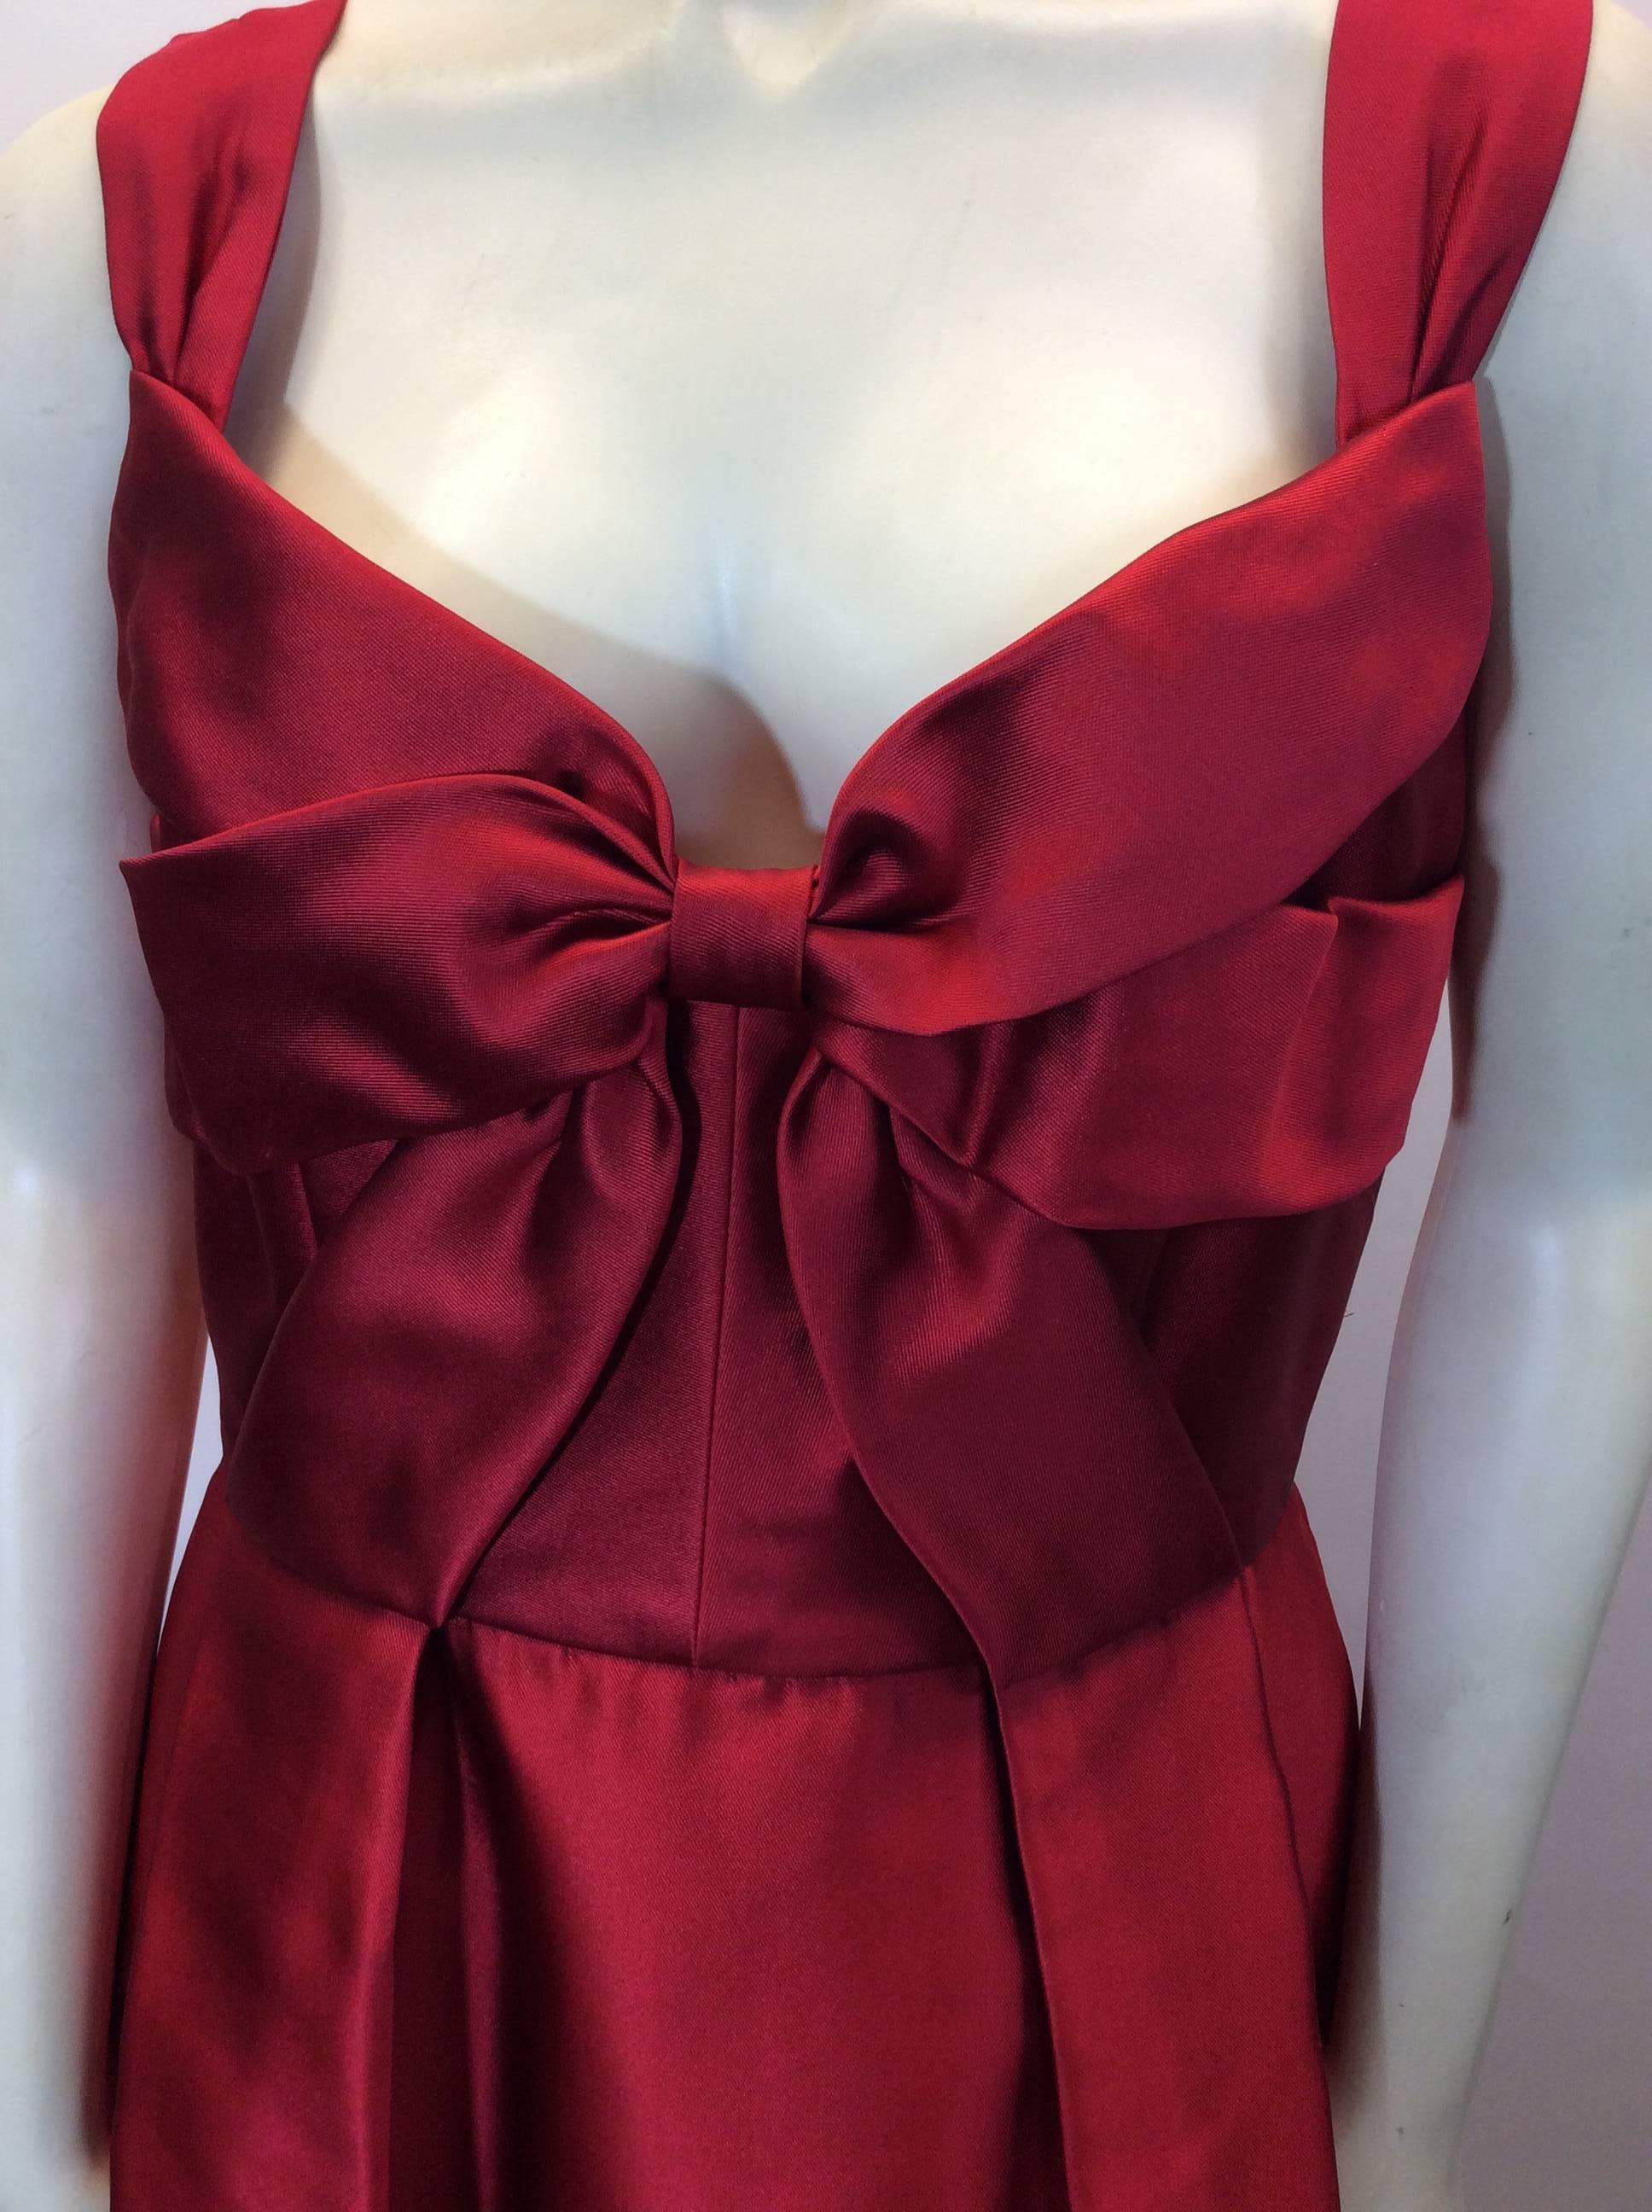 Oscar De La Renta Red Satin Bow Dress with Pleated Skirt For Sale 1